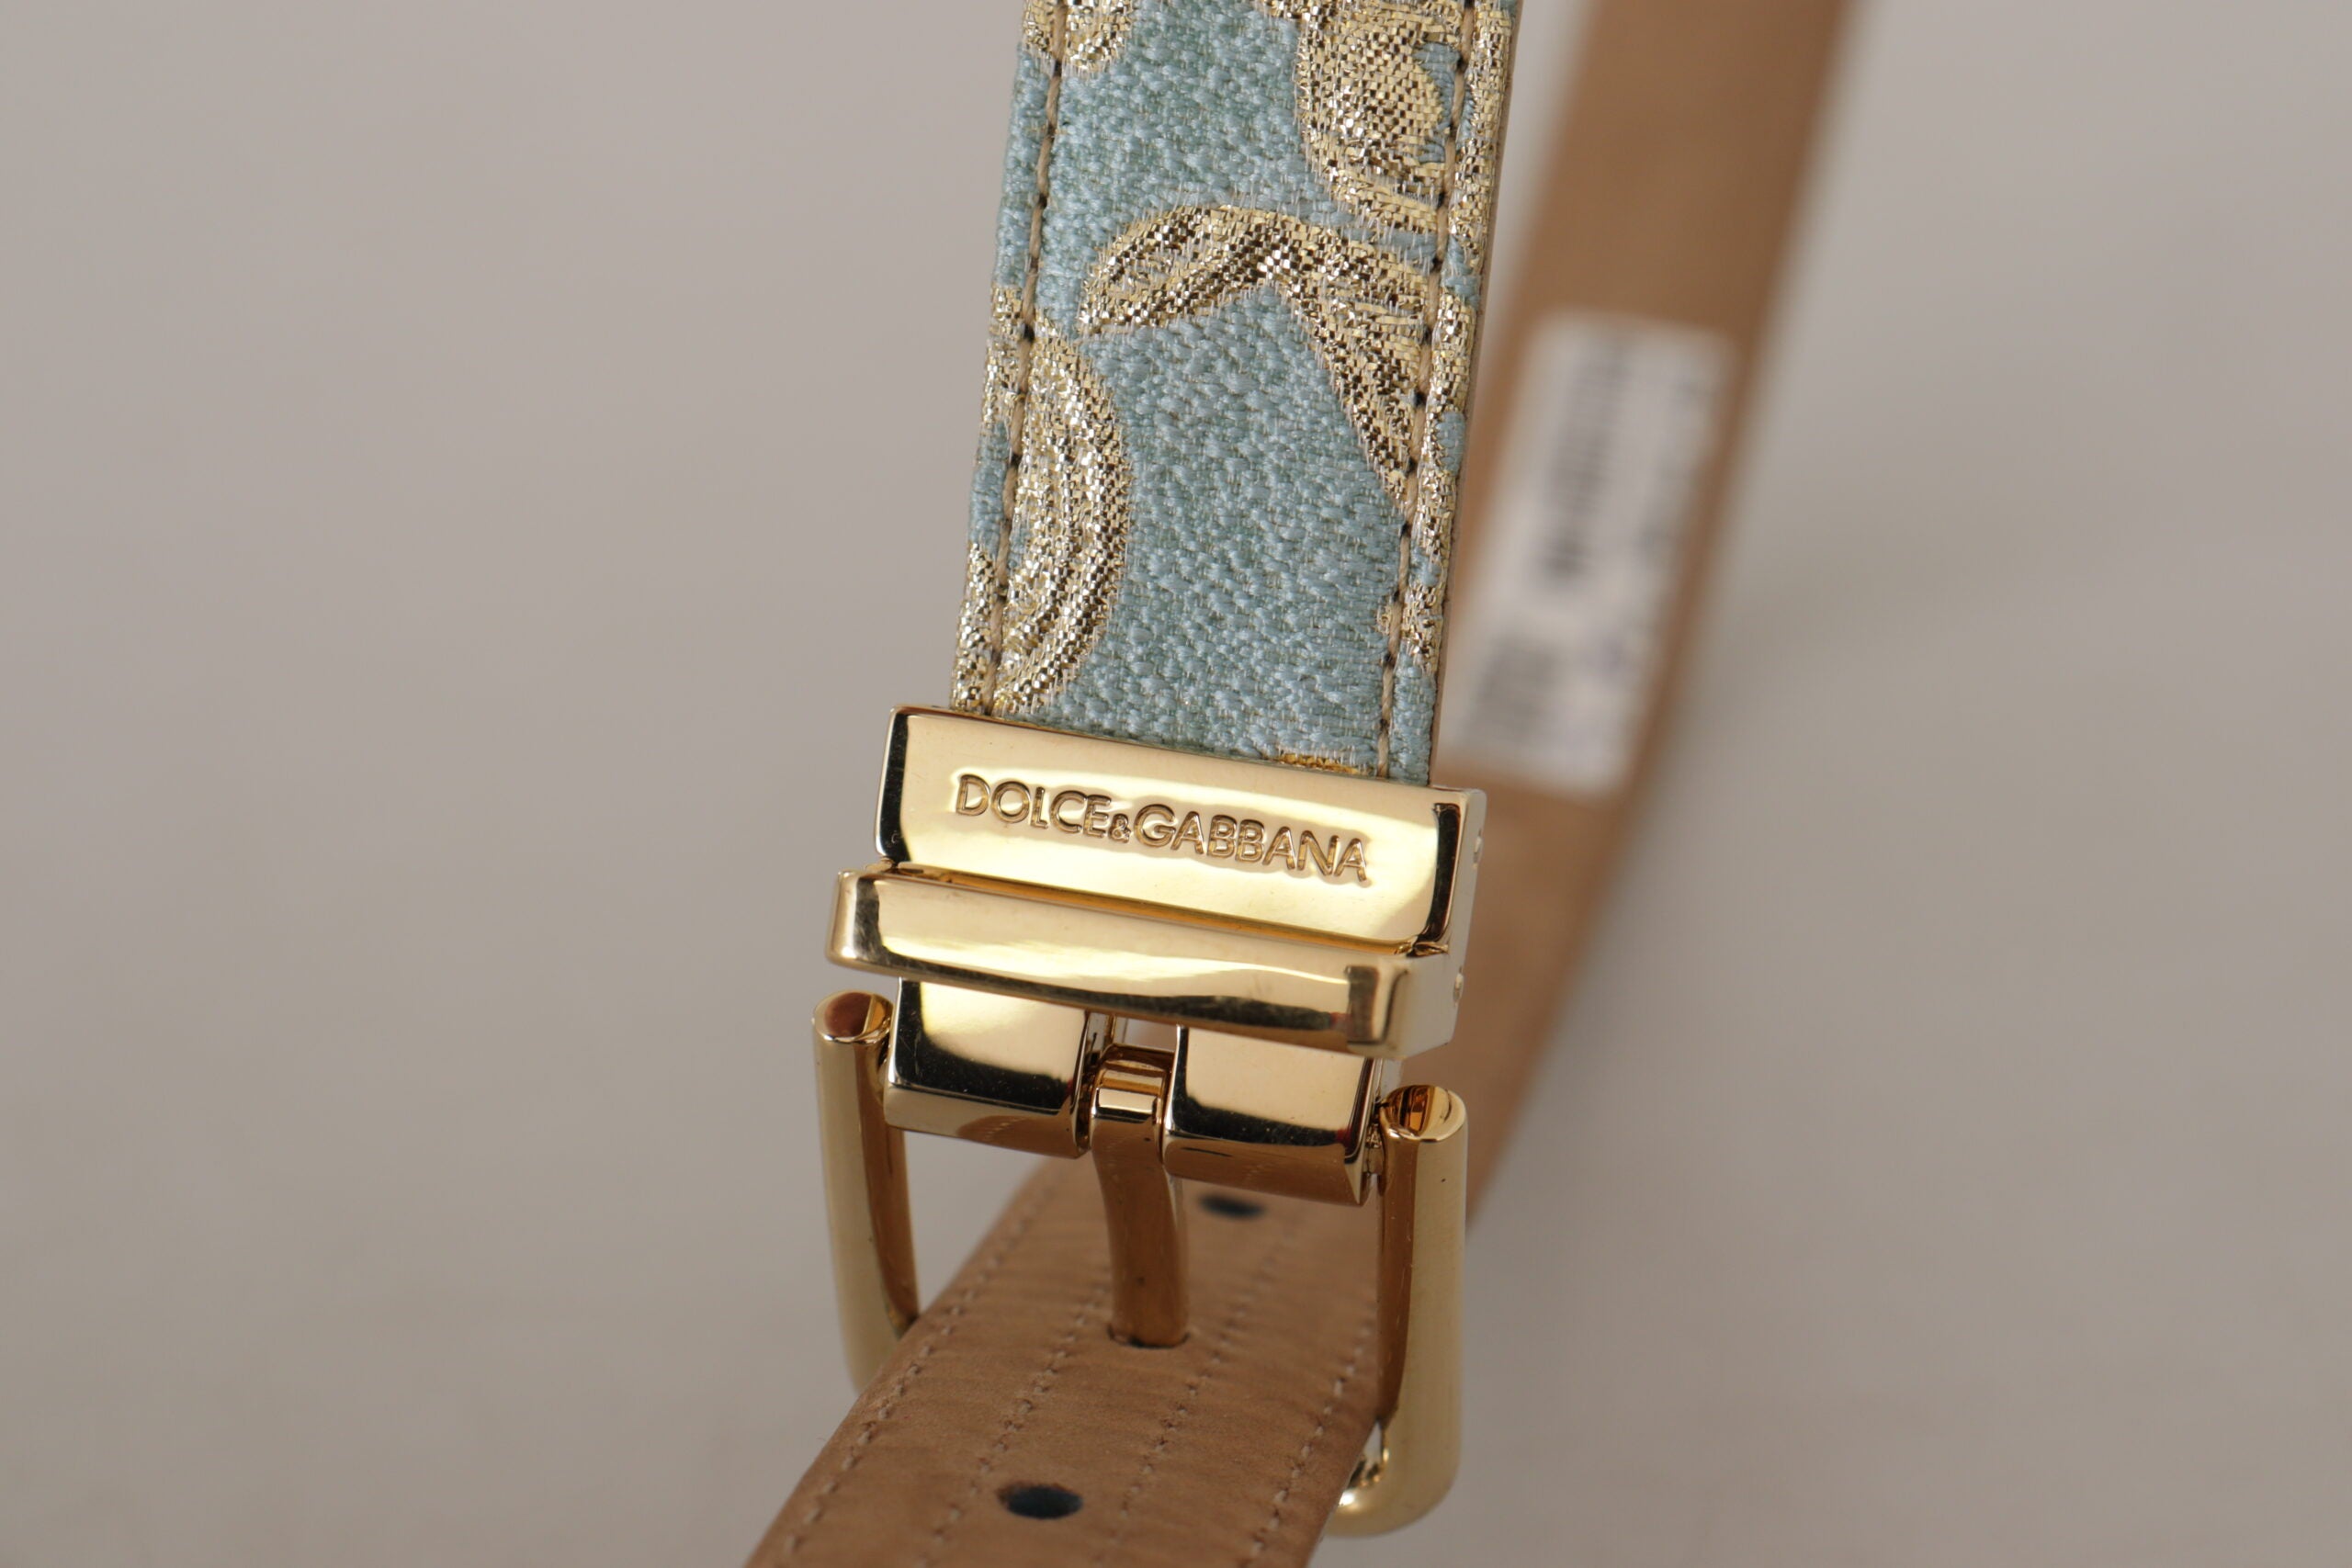 Dolce & Gabbana Elegant Light Blue Leather Belt with Gold Buckle